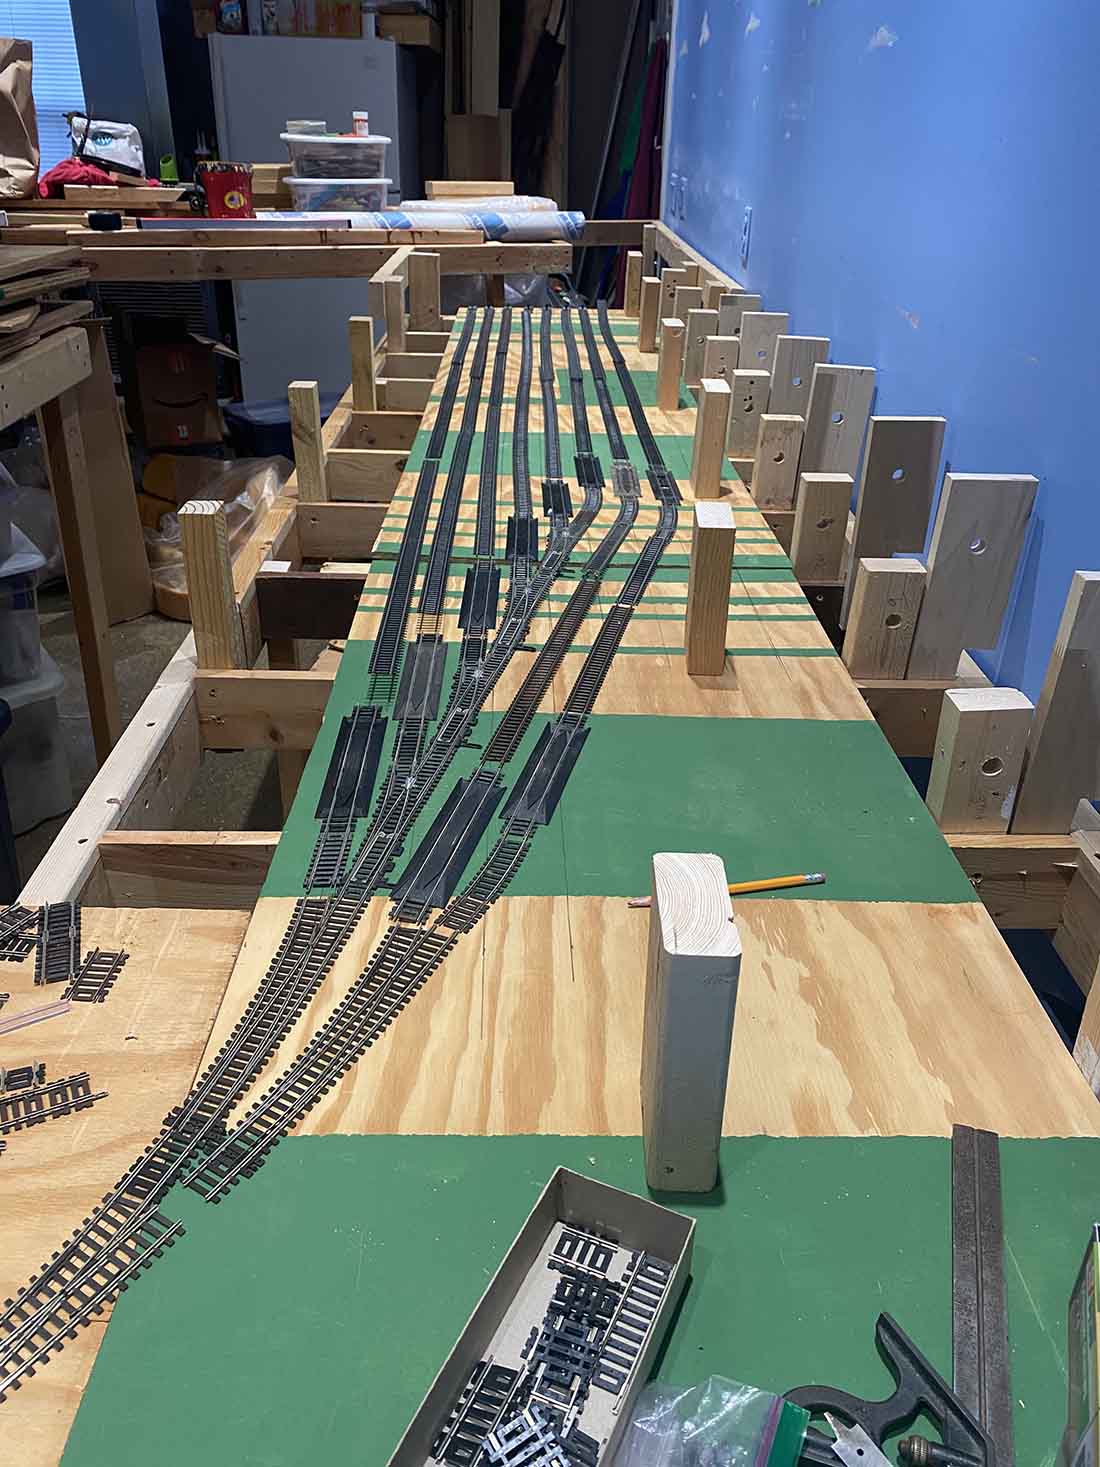 17x17 train layout sidings